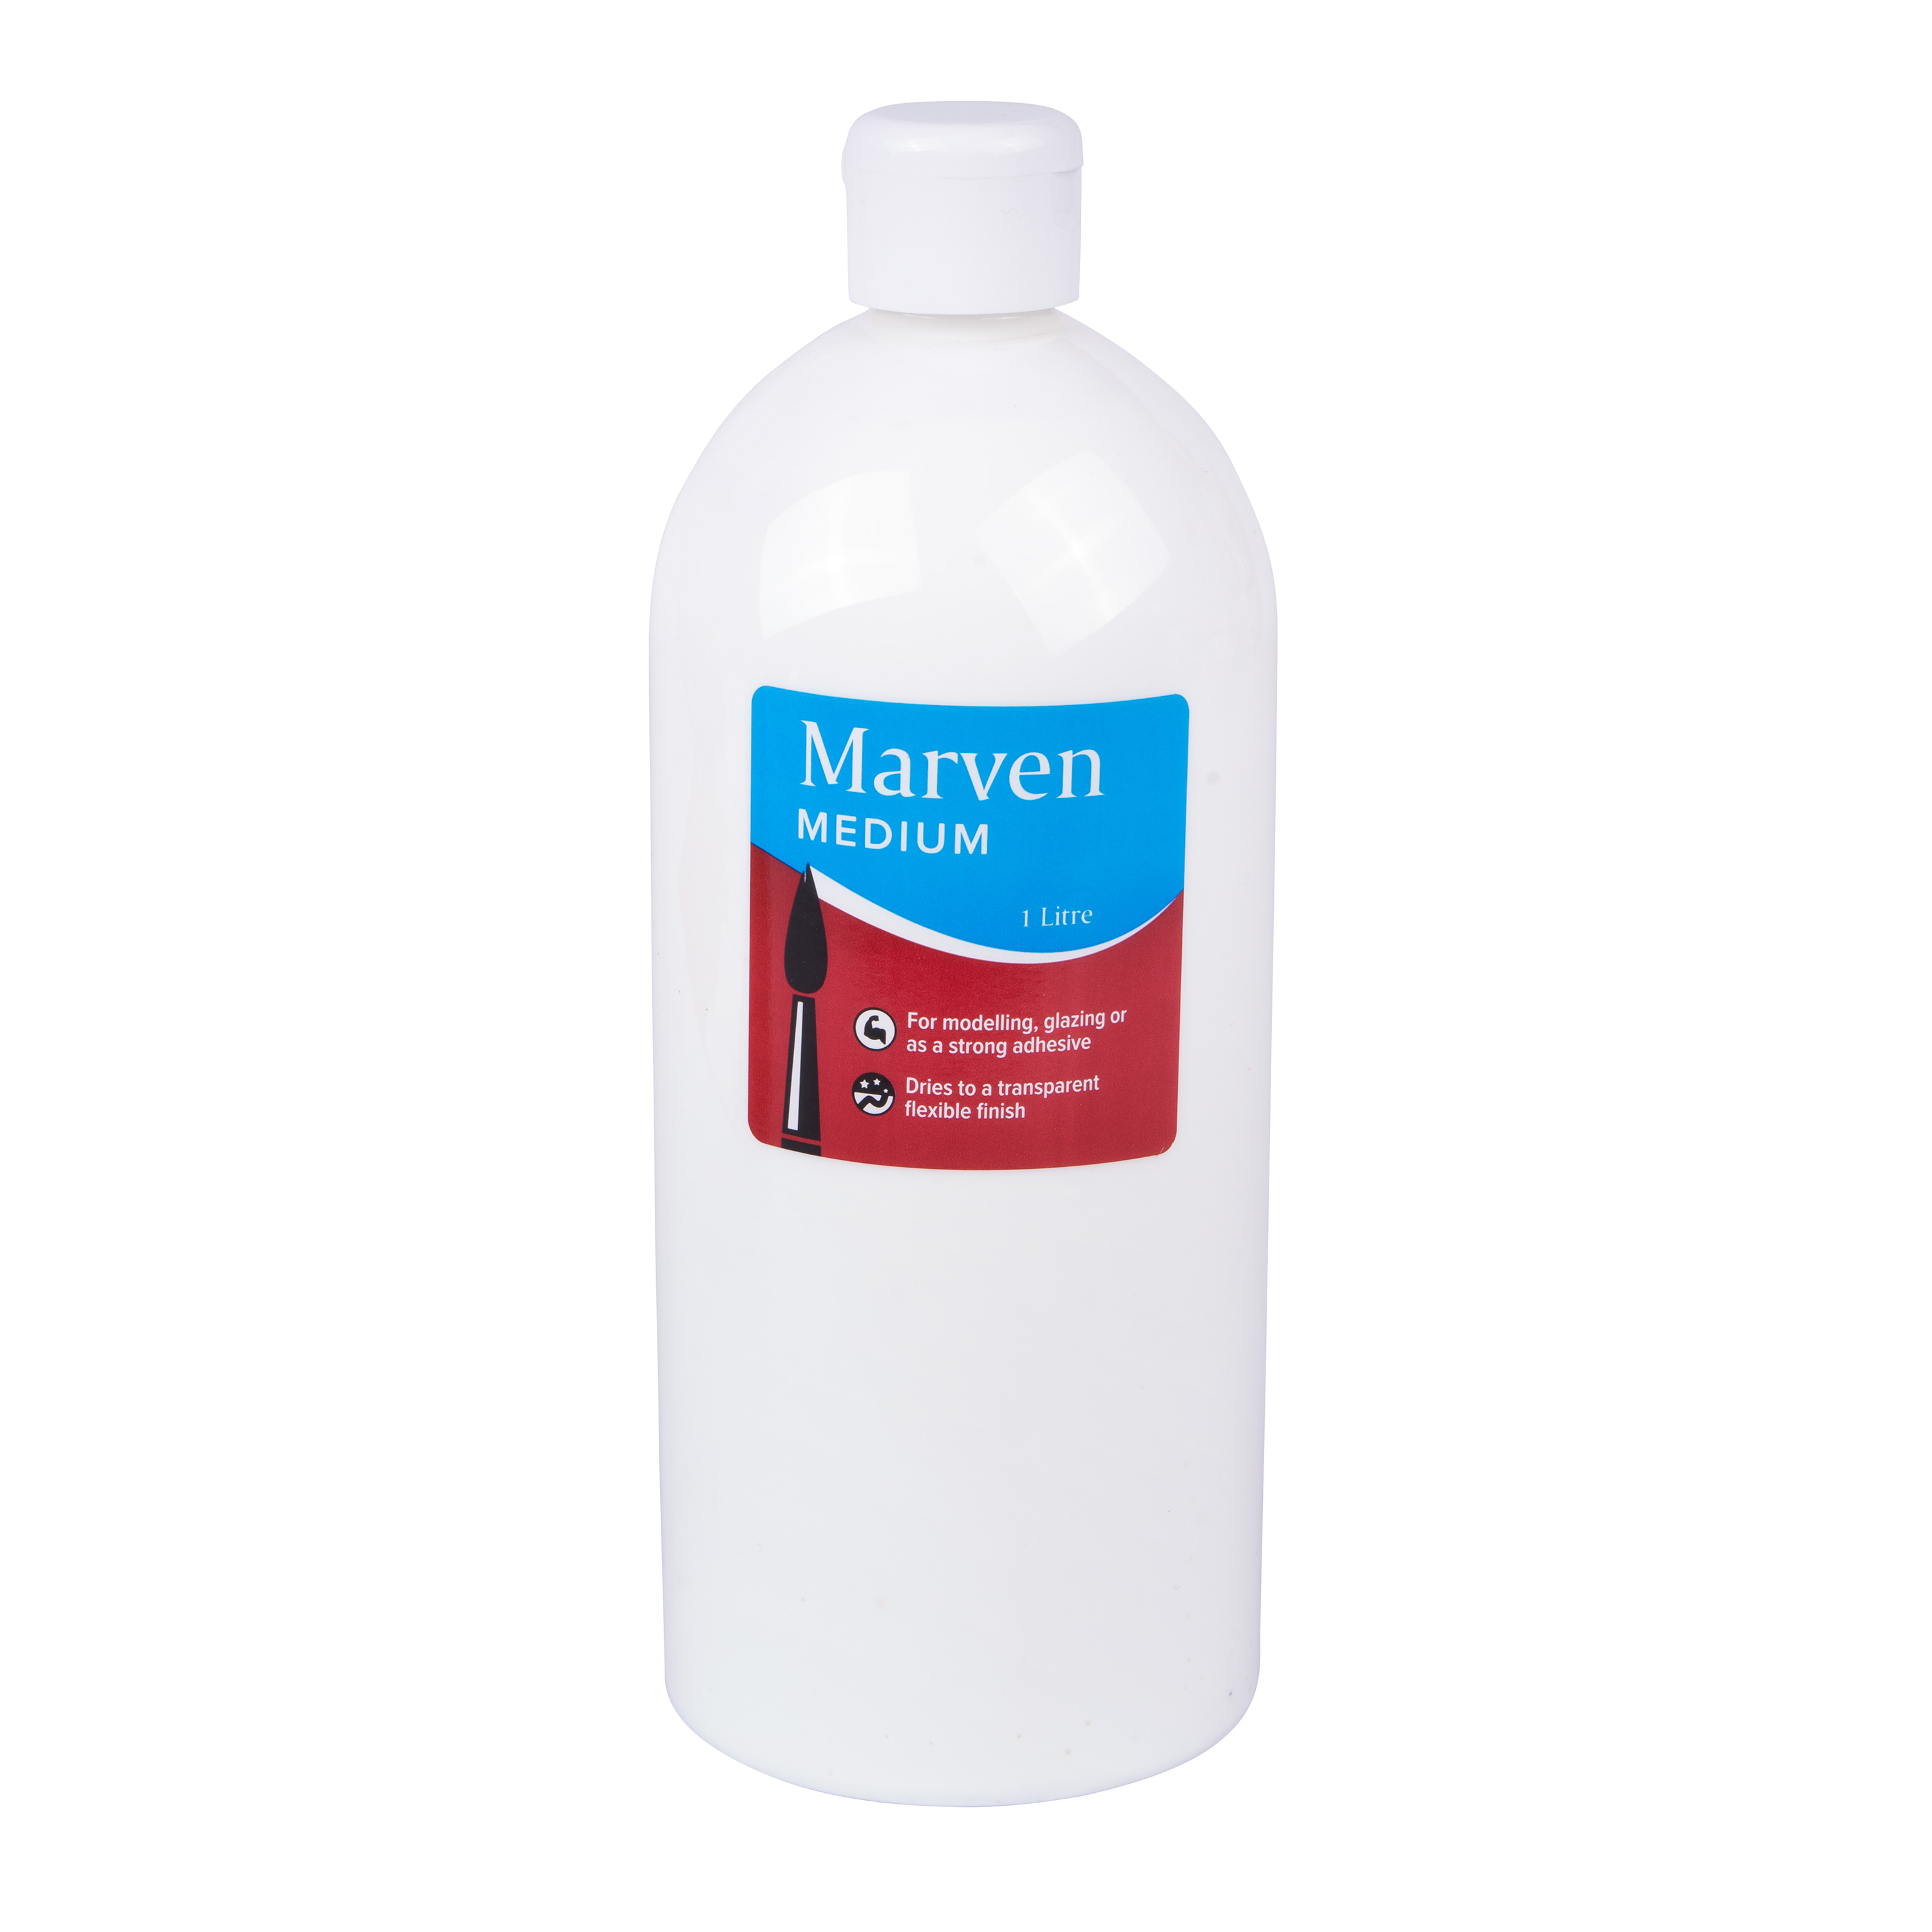 Bastelkleber Marven Medium, 1 Liter